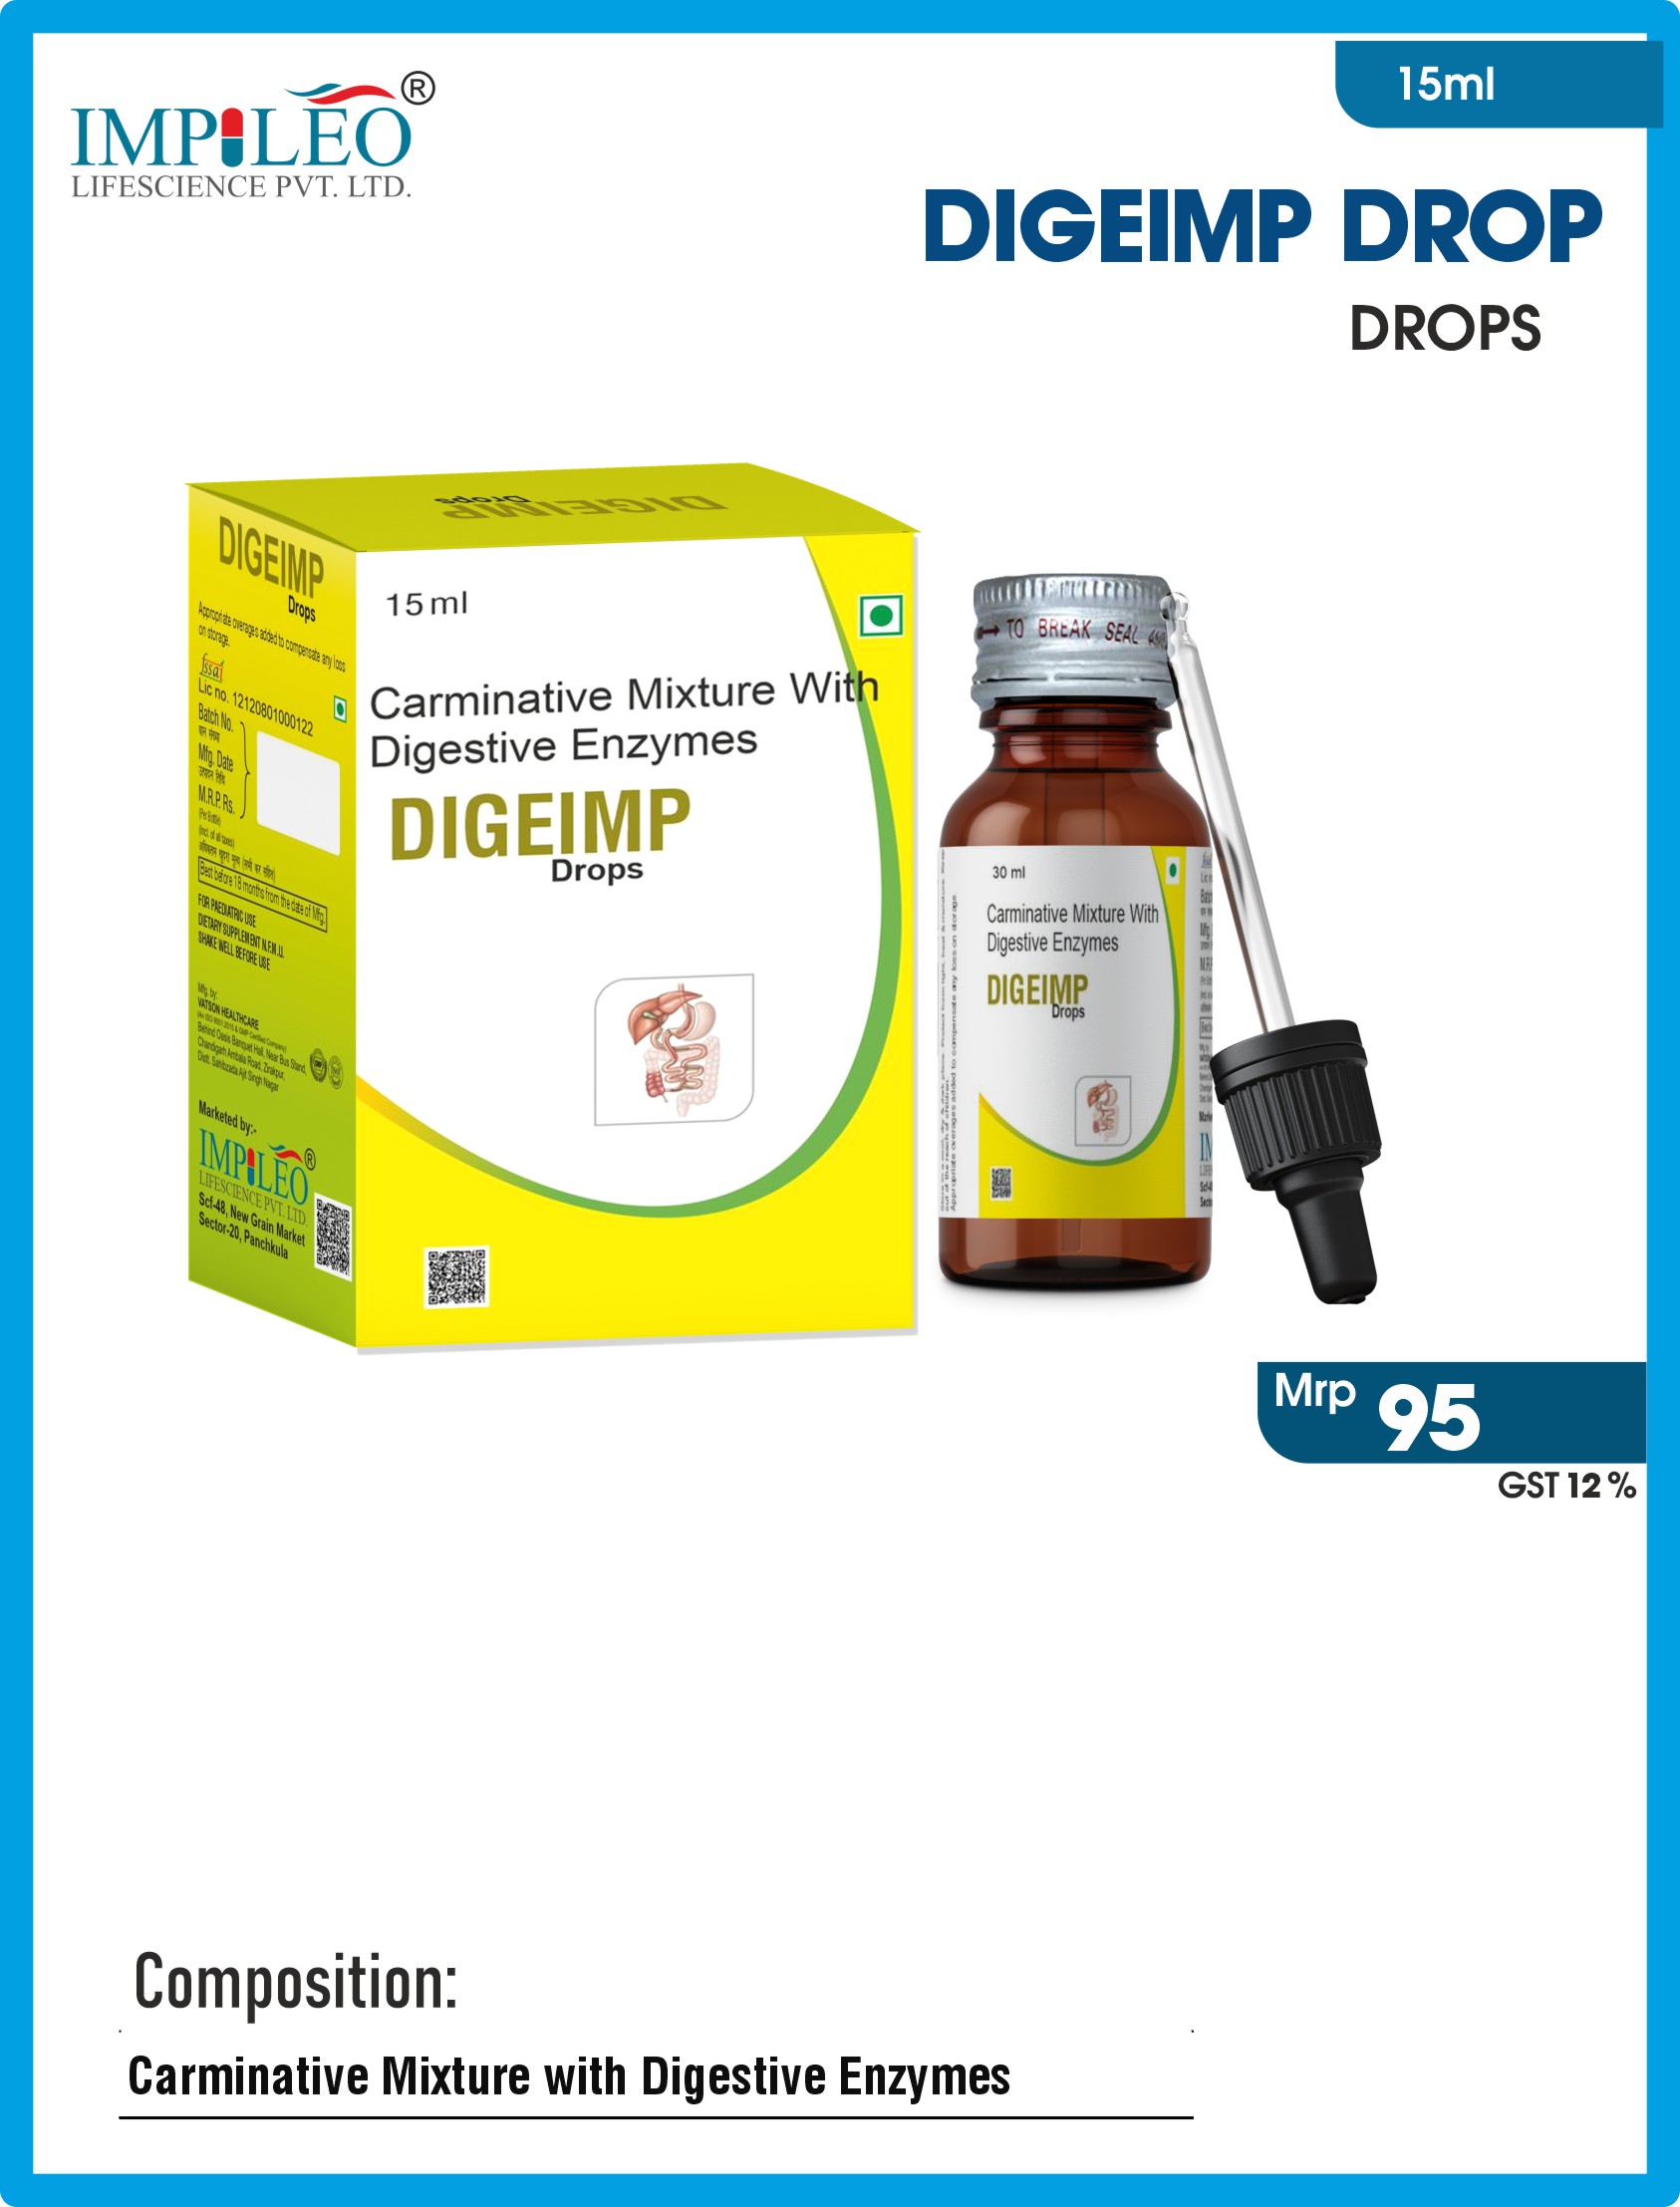 Discover Premium PCD Pharma Franchise in India : Introducing DIGEIMP DROP